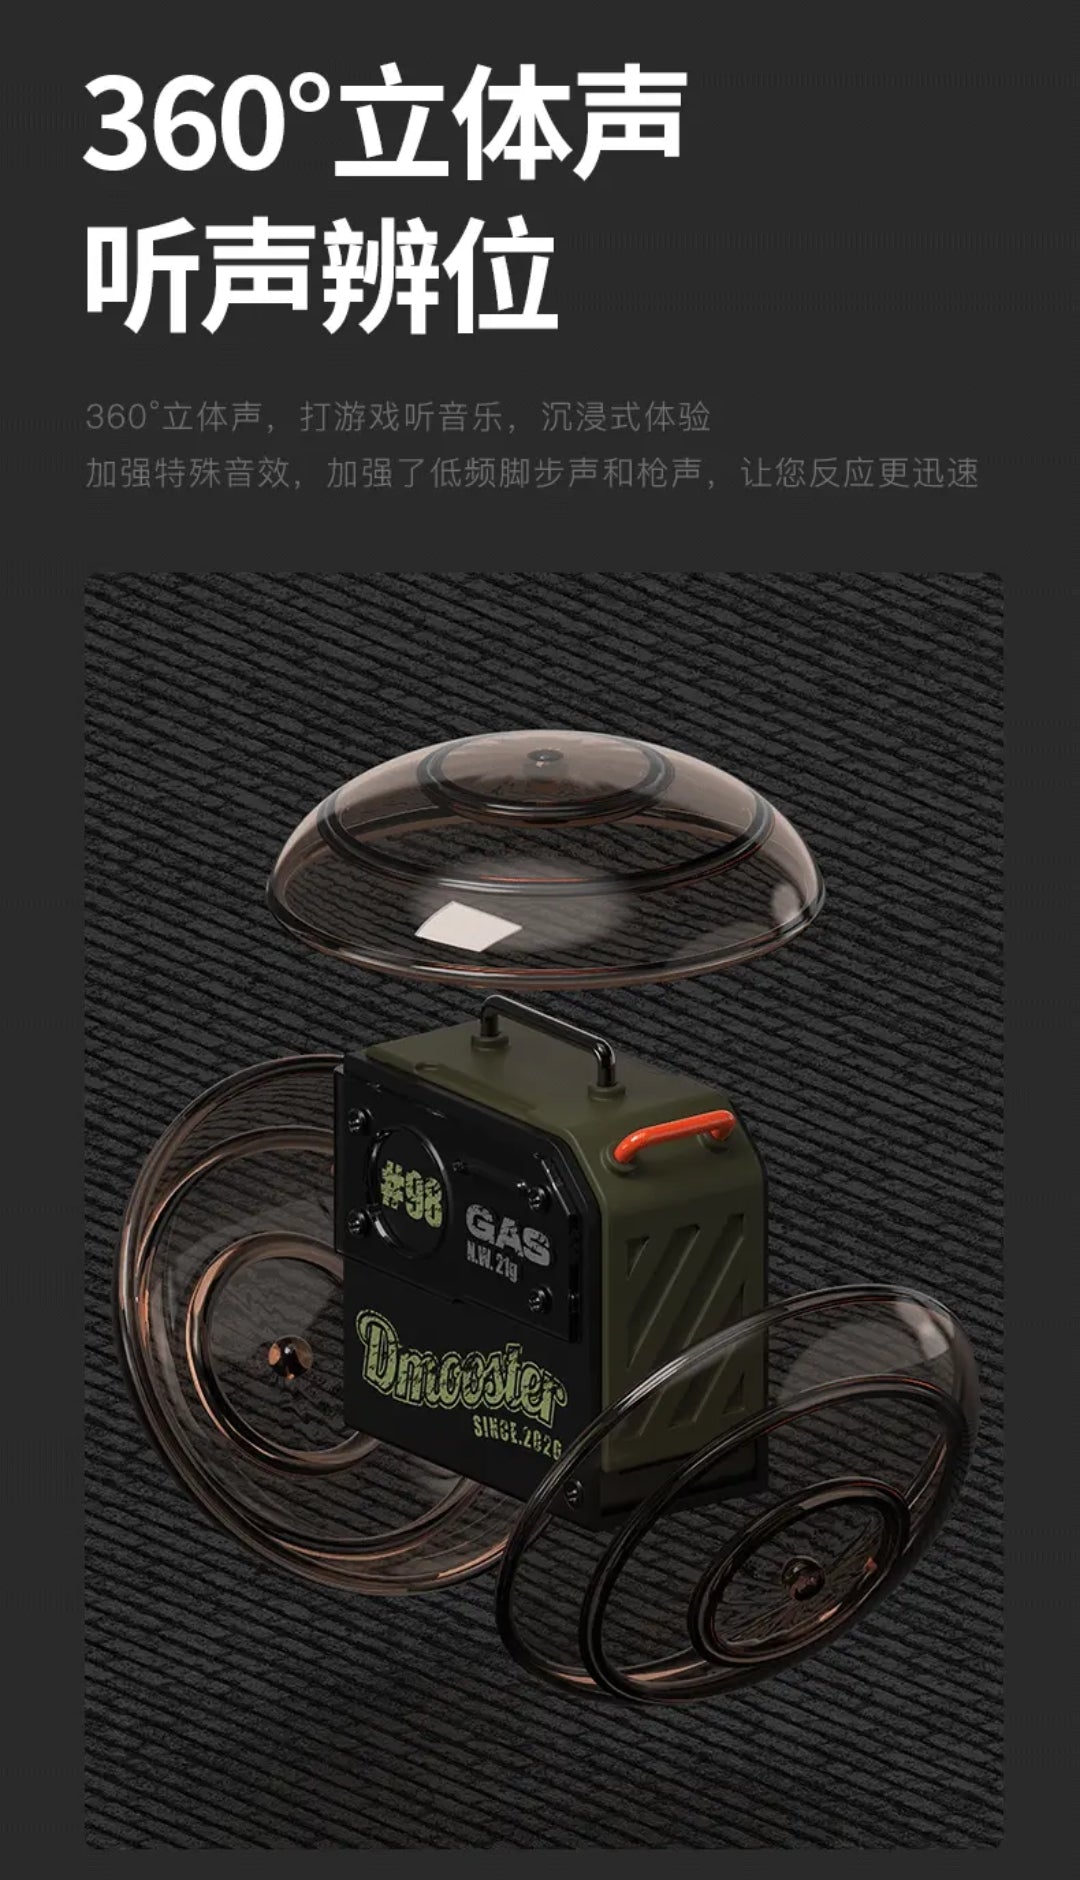 Elephant Trunk Co-branded Big Monster DMOOSTER #98 Oil Barrel Bluetooth Headset D37 Wireless Sports Model For Running